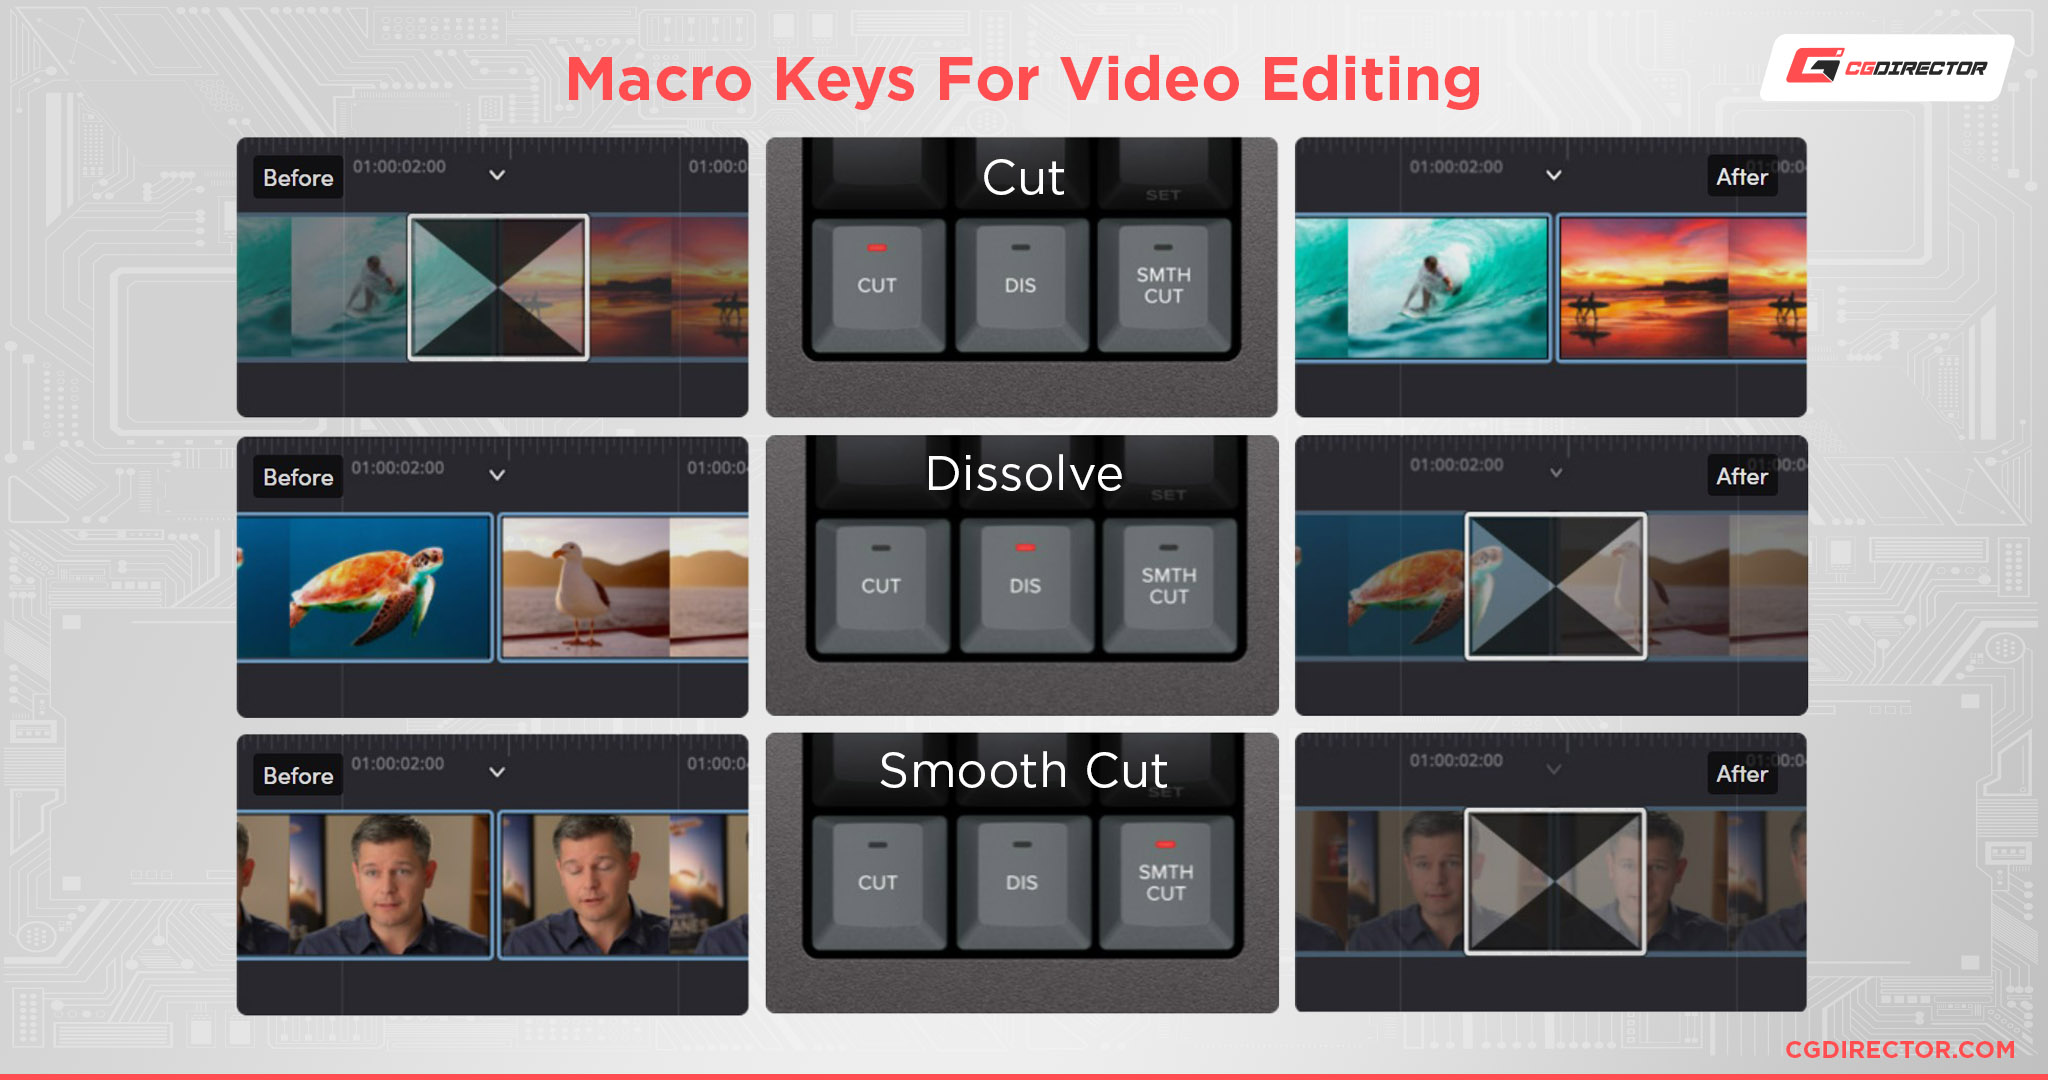 Macro Keys For Video Editing